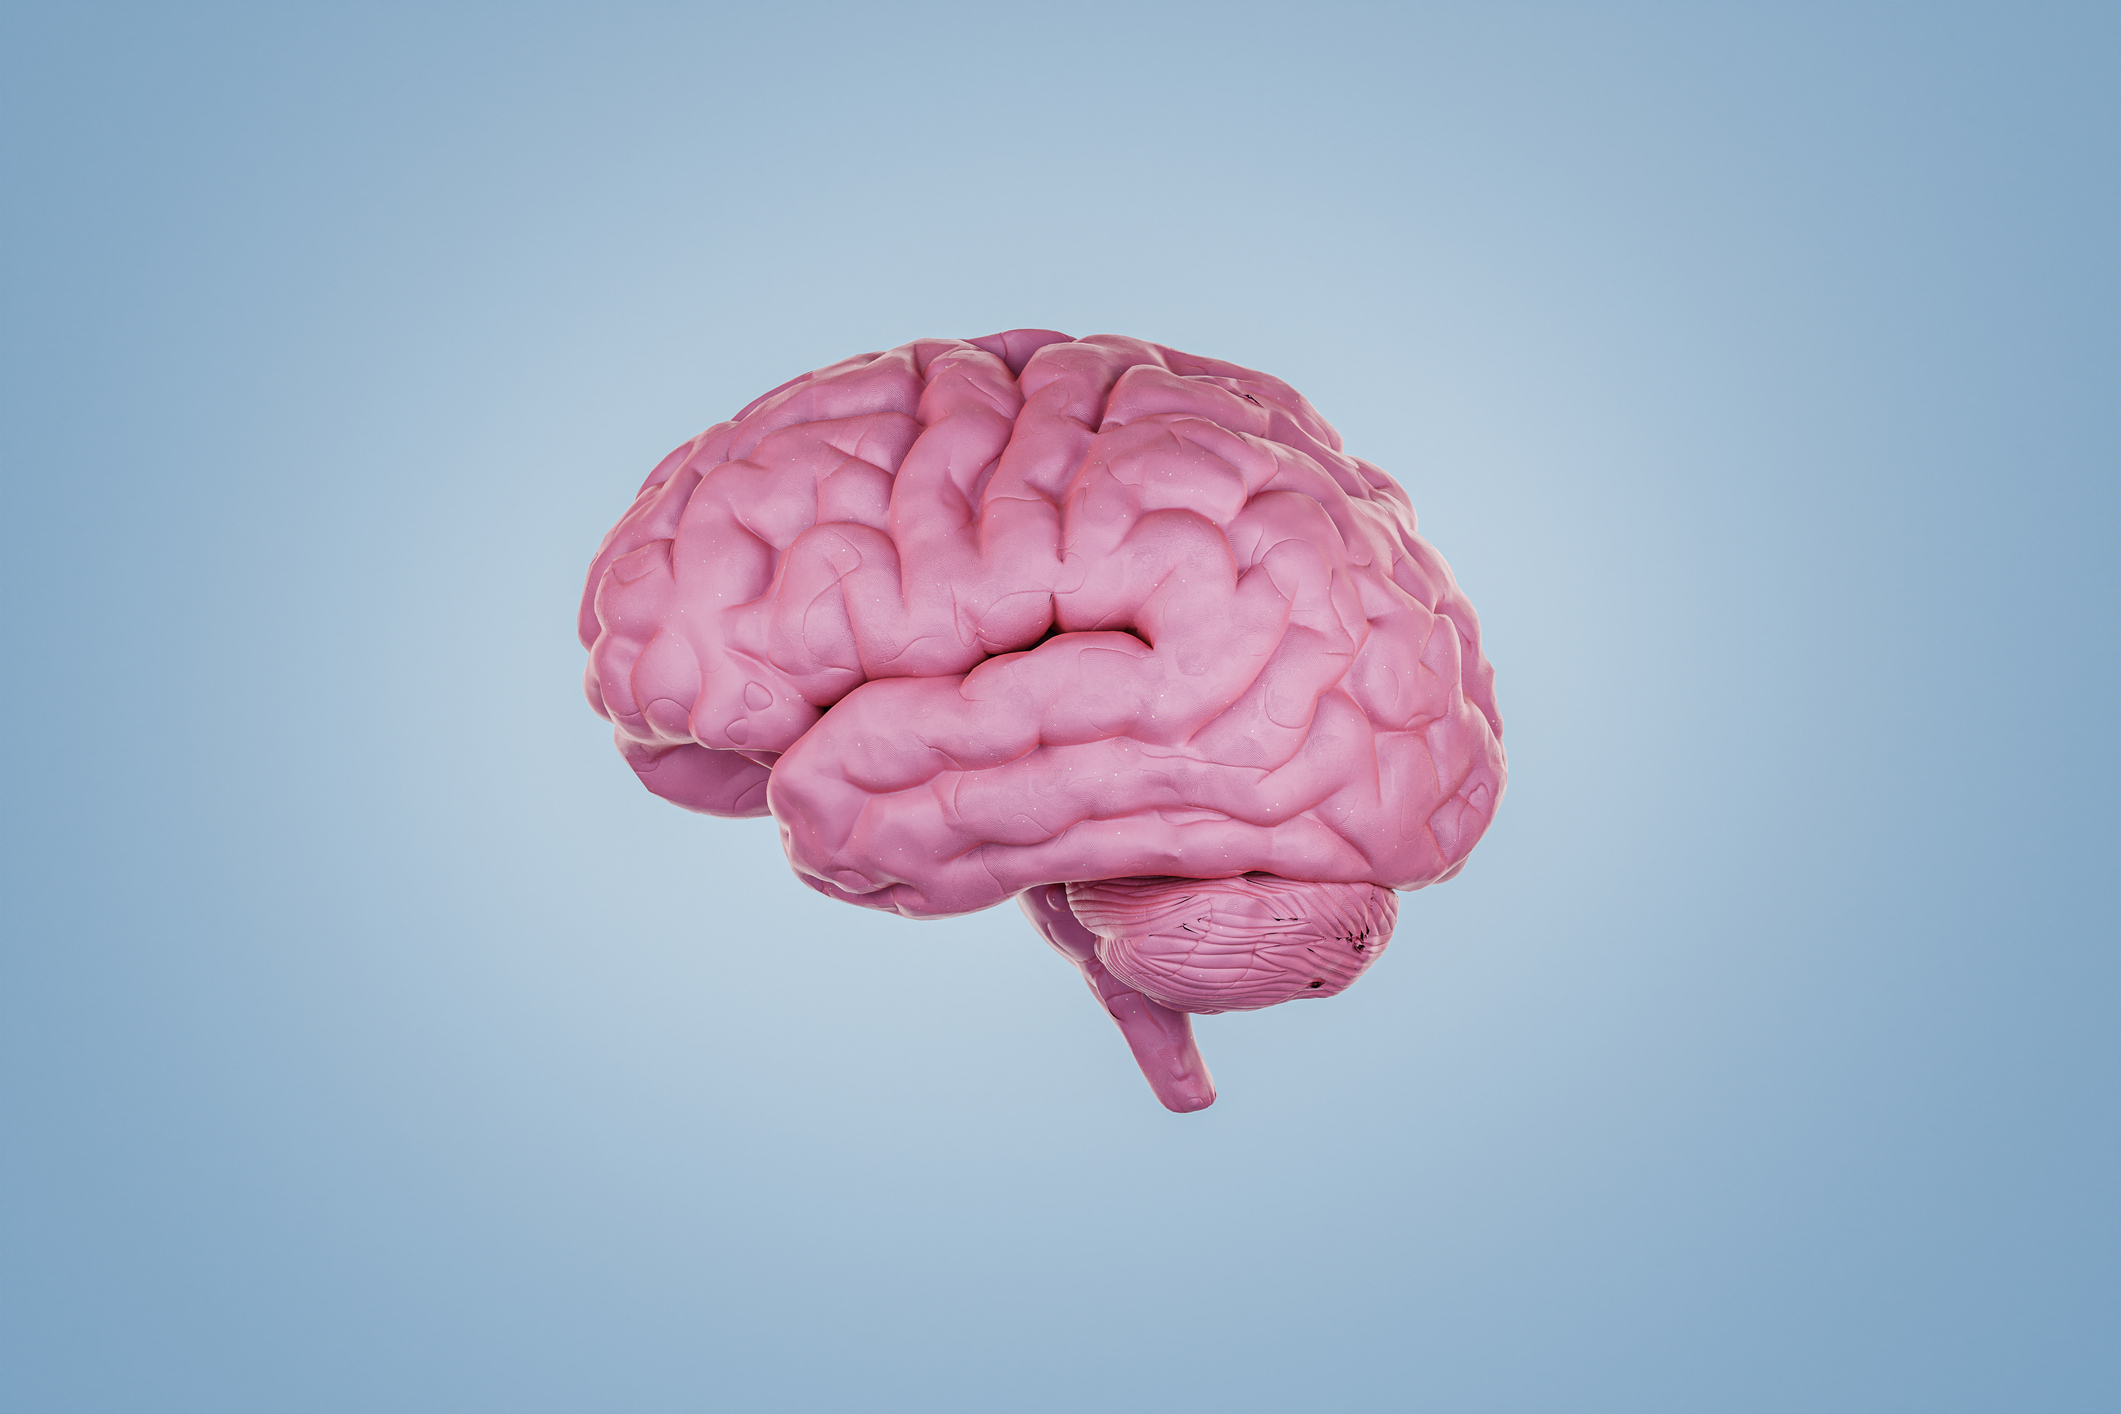 a model of a human brain